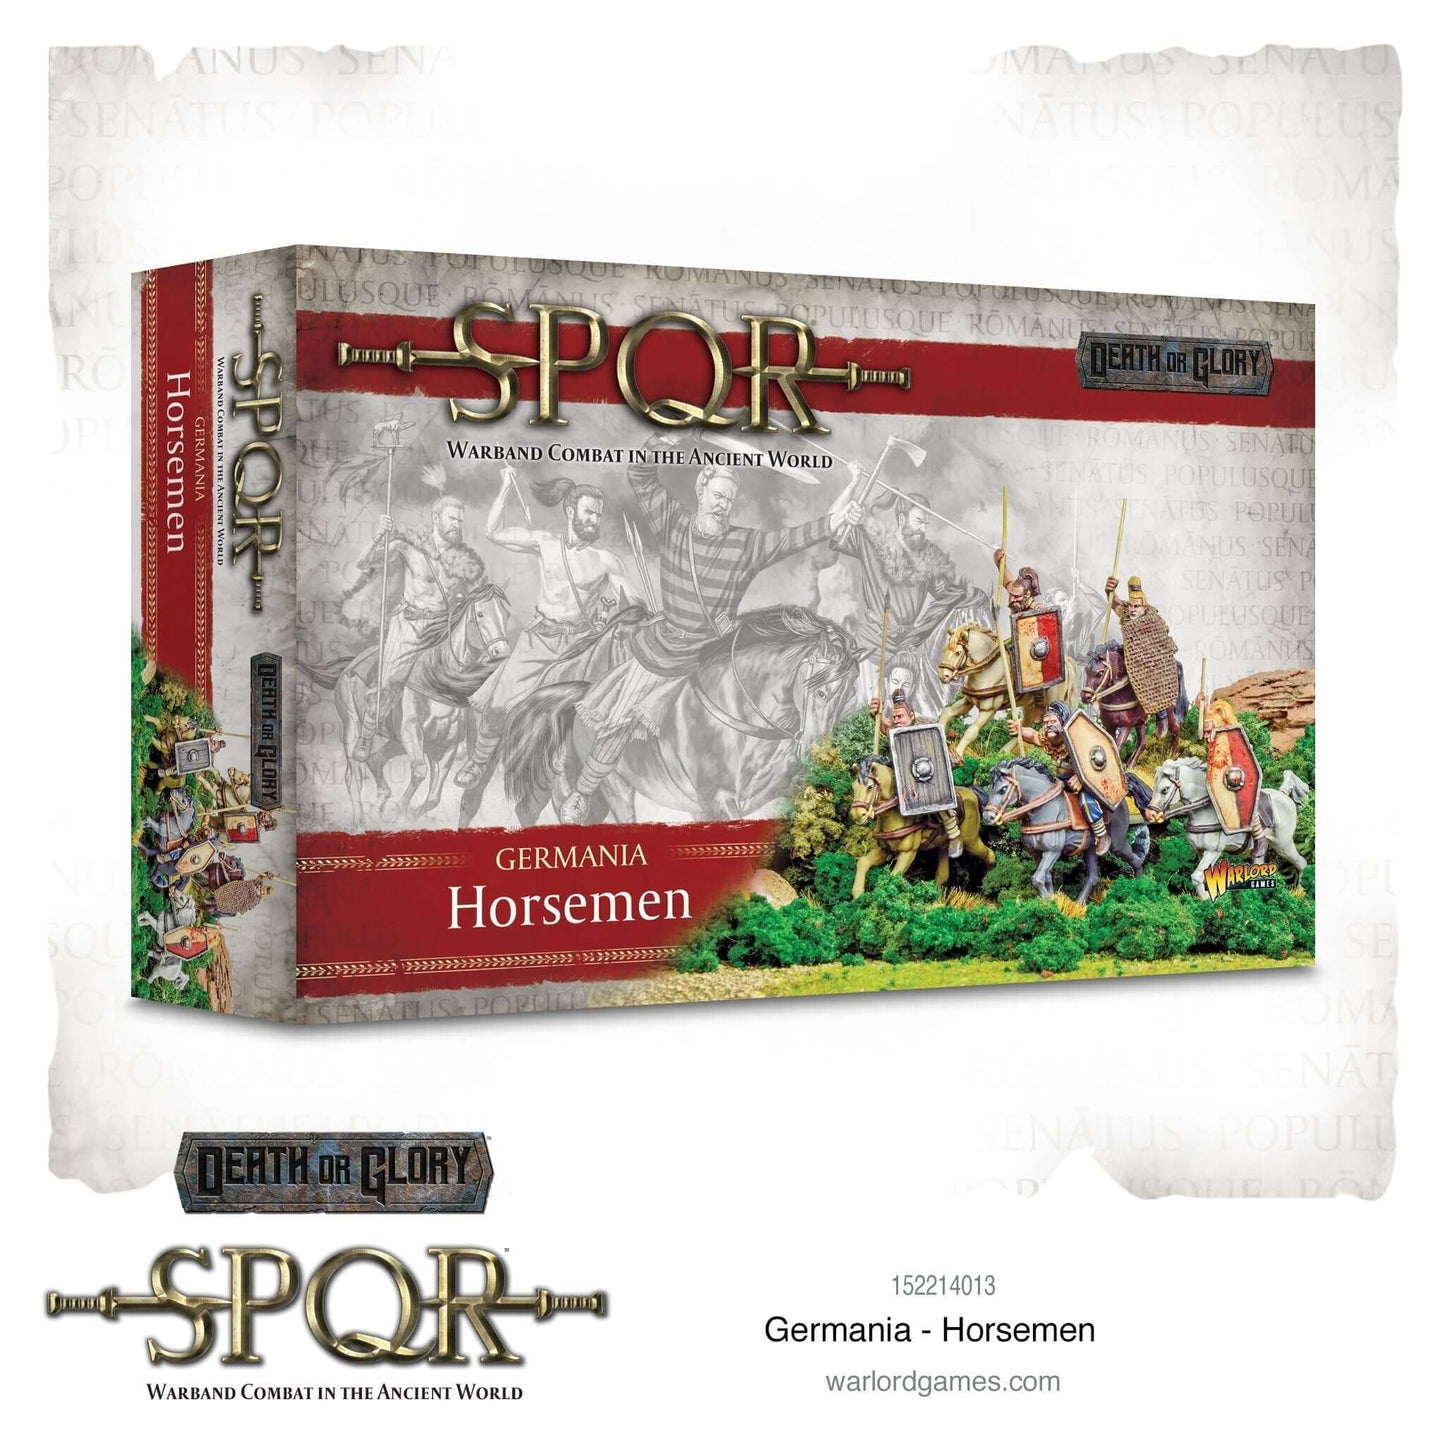 SPQR: Germania - Horsemen by Warlord